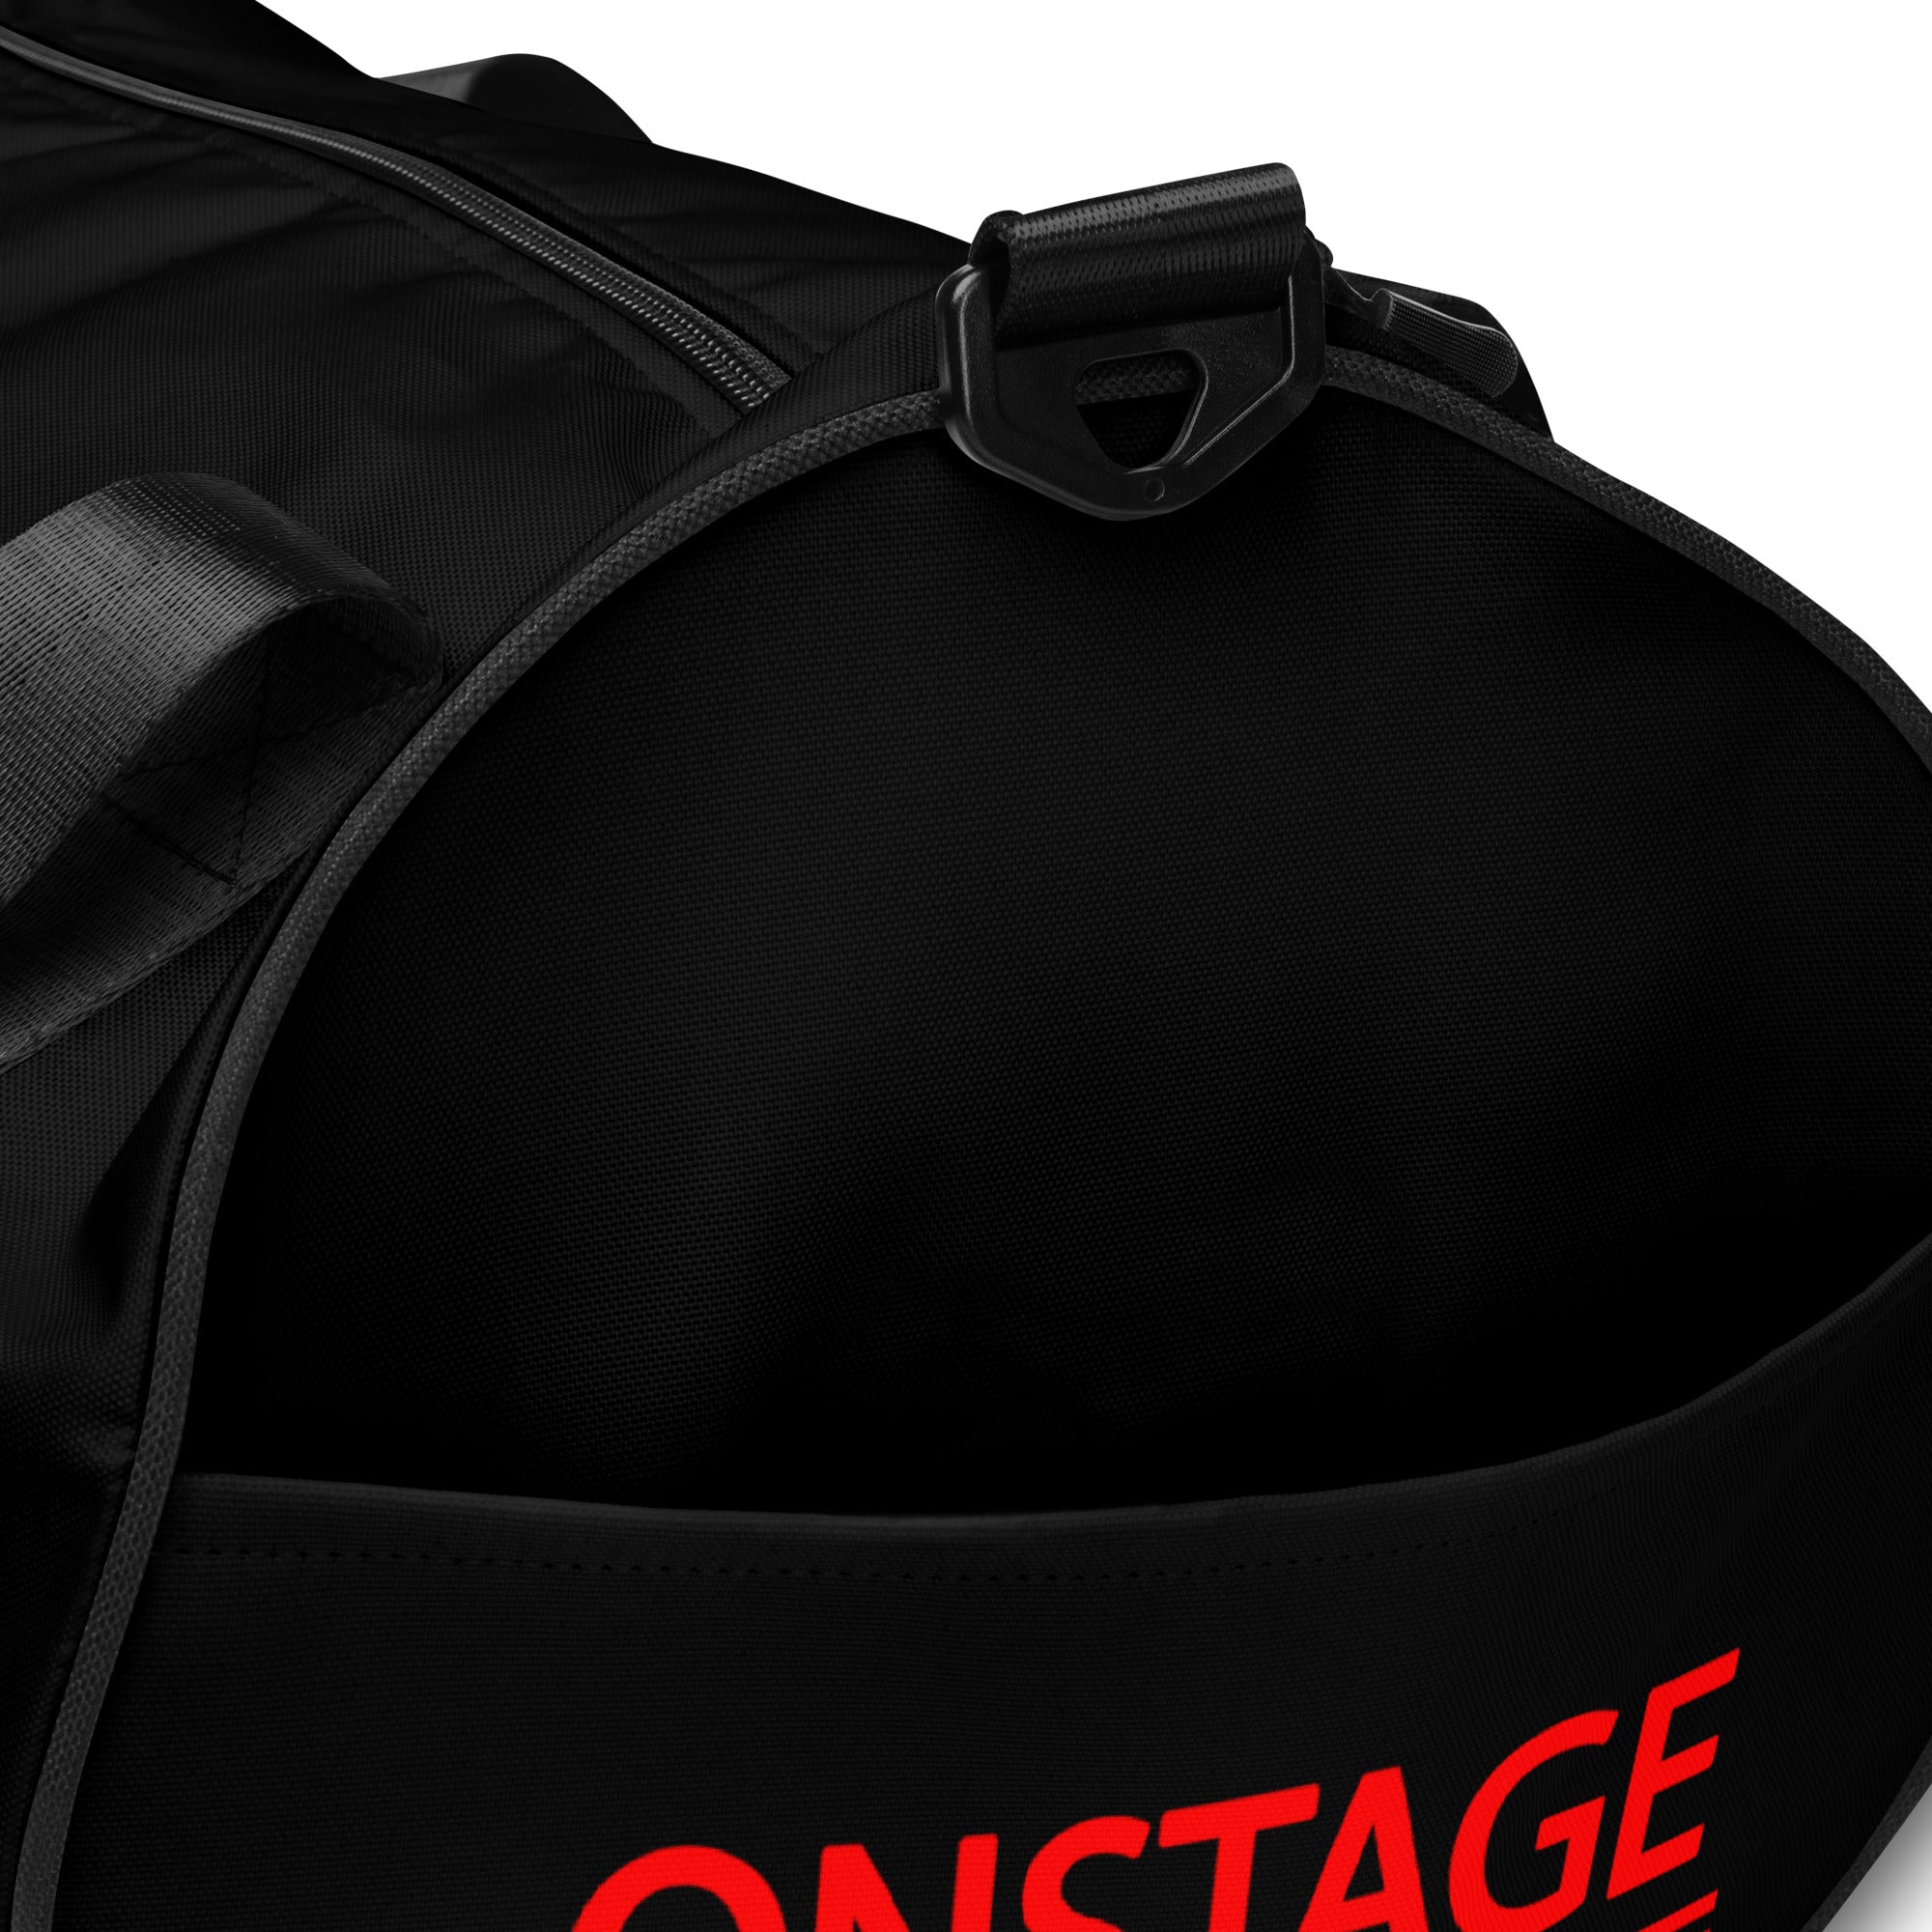 ONSTAGE Gym Bag